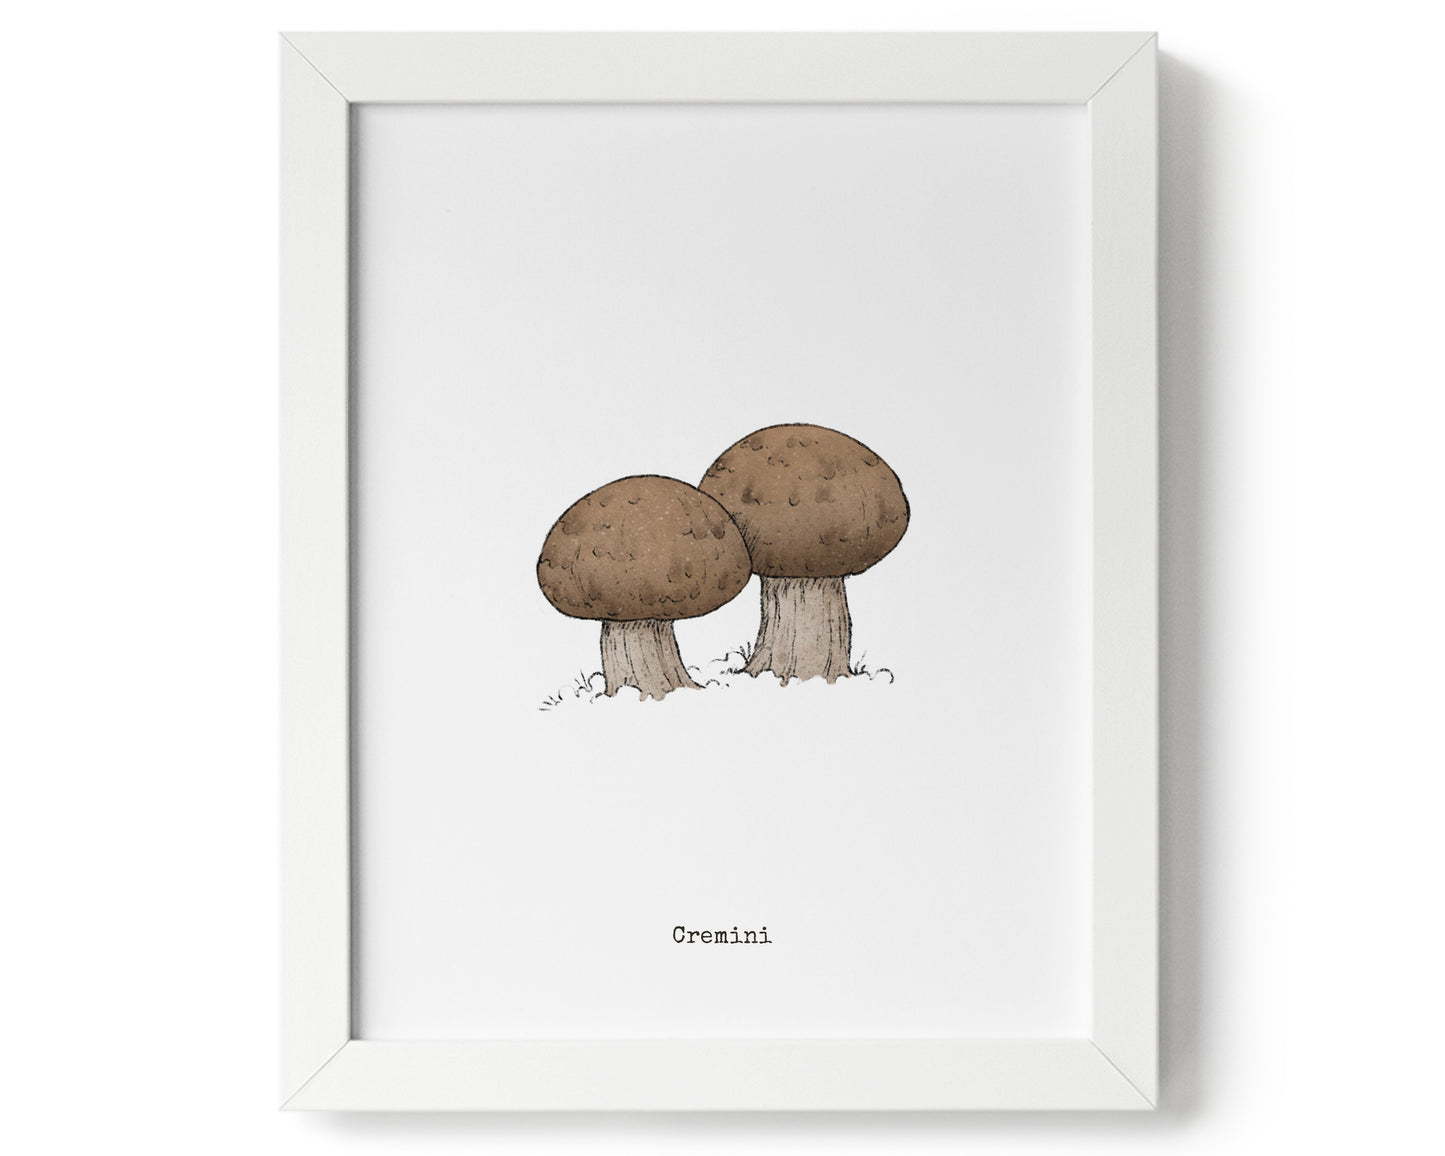 "Cremini Mushroom" by Catherine Hébert - Cremini Mushroom Art Print - 8"x10" size